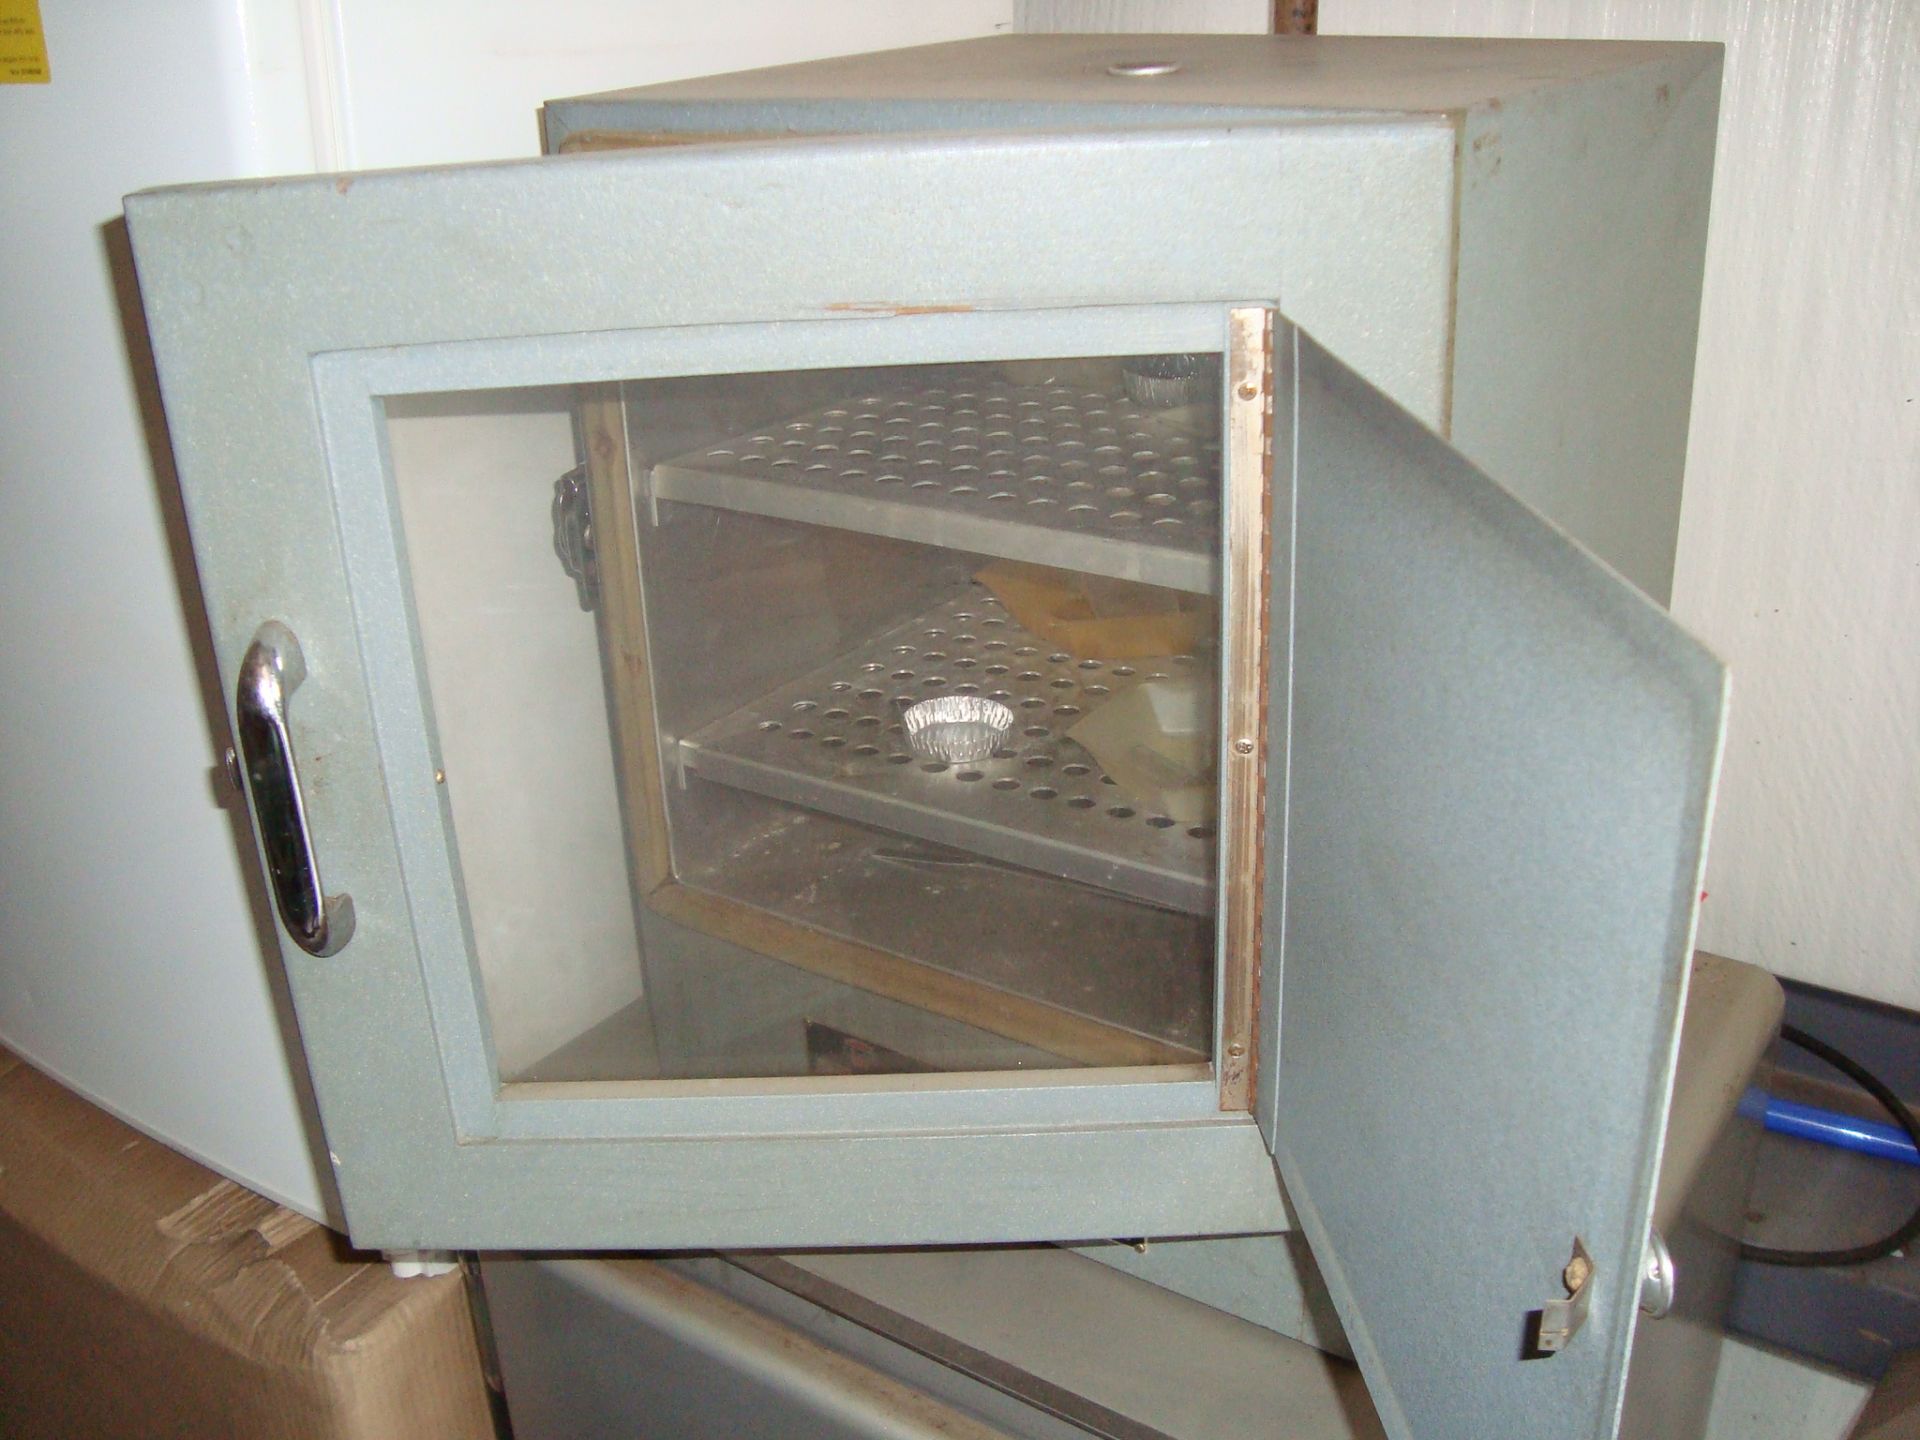 Lab Oven, CS & E, Cat. #200, Model #IMP, SN 3180A - Image 2 of 3